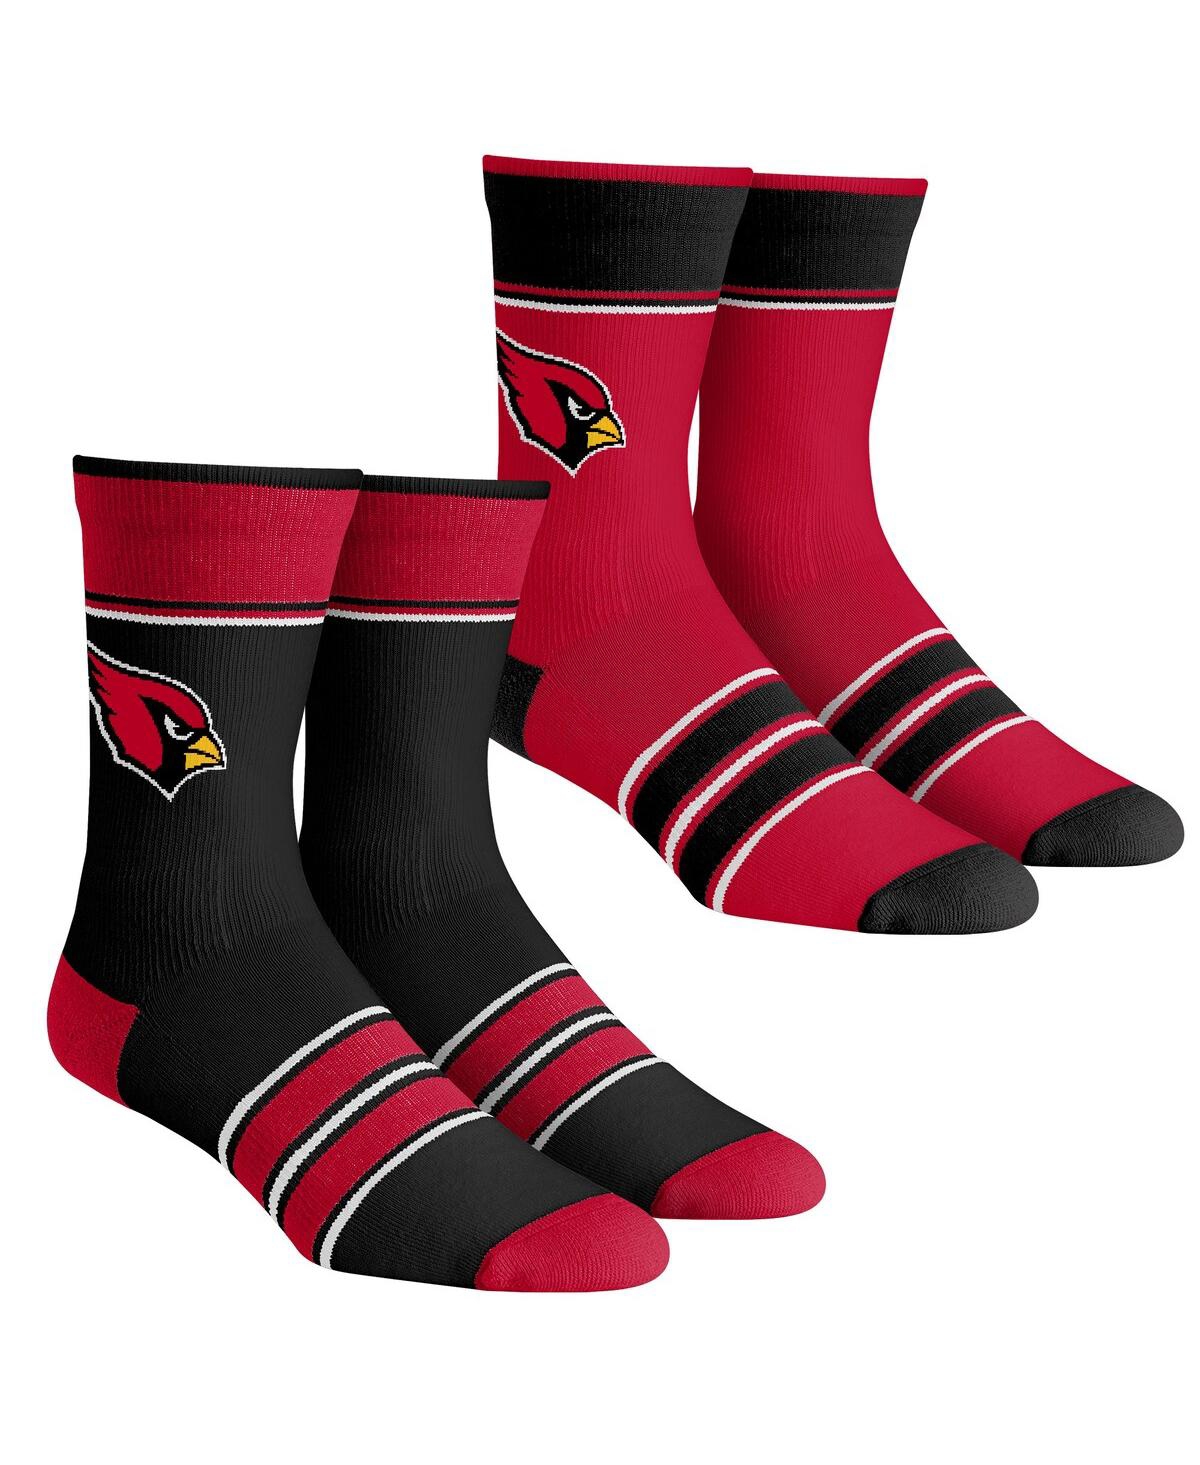 Men's and Women's Rock 'Em Socks Arizona Cardinals Multi-Stripe 2-Pack Team Crew Sock Set - Maroon, Black